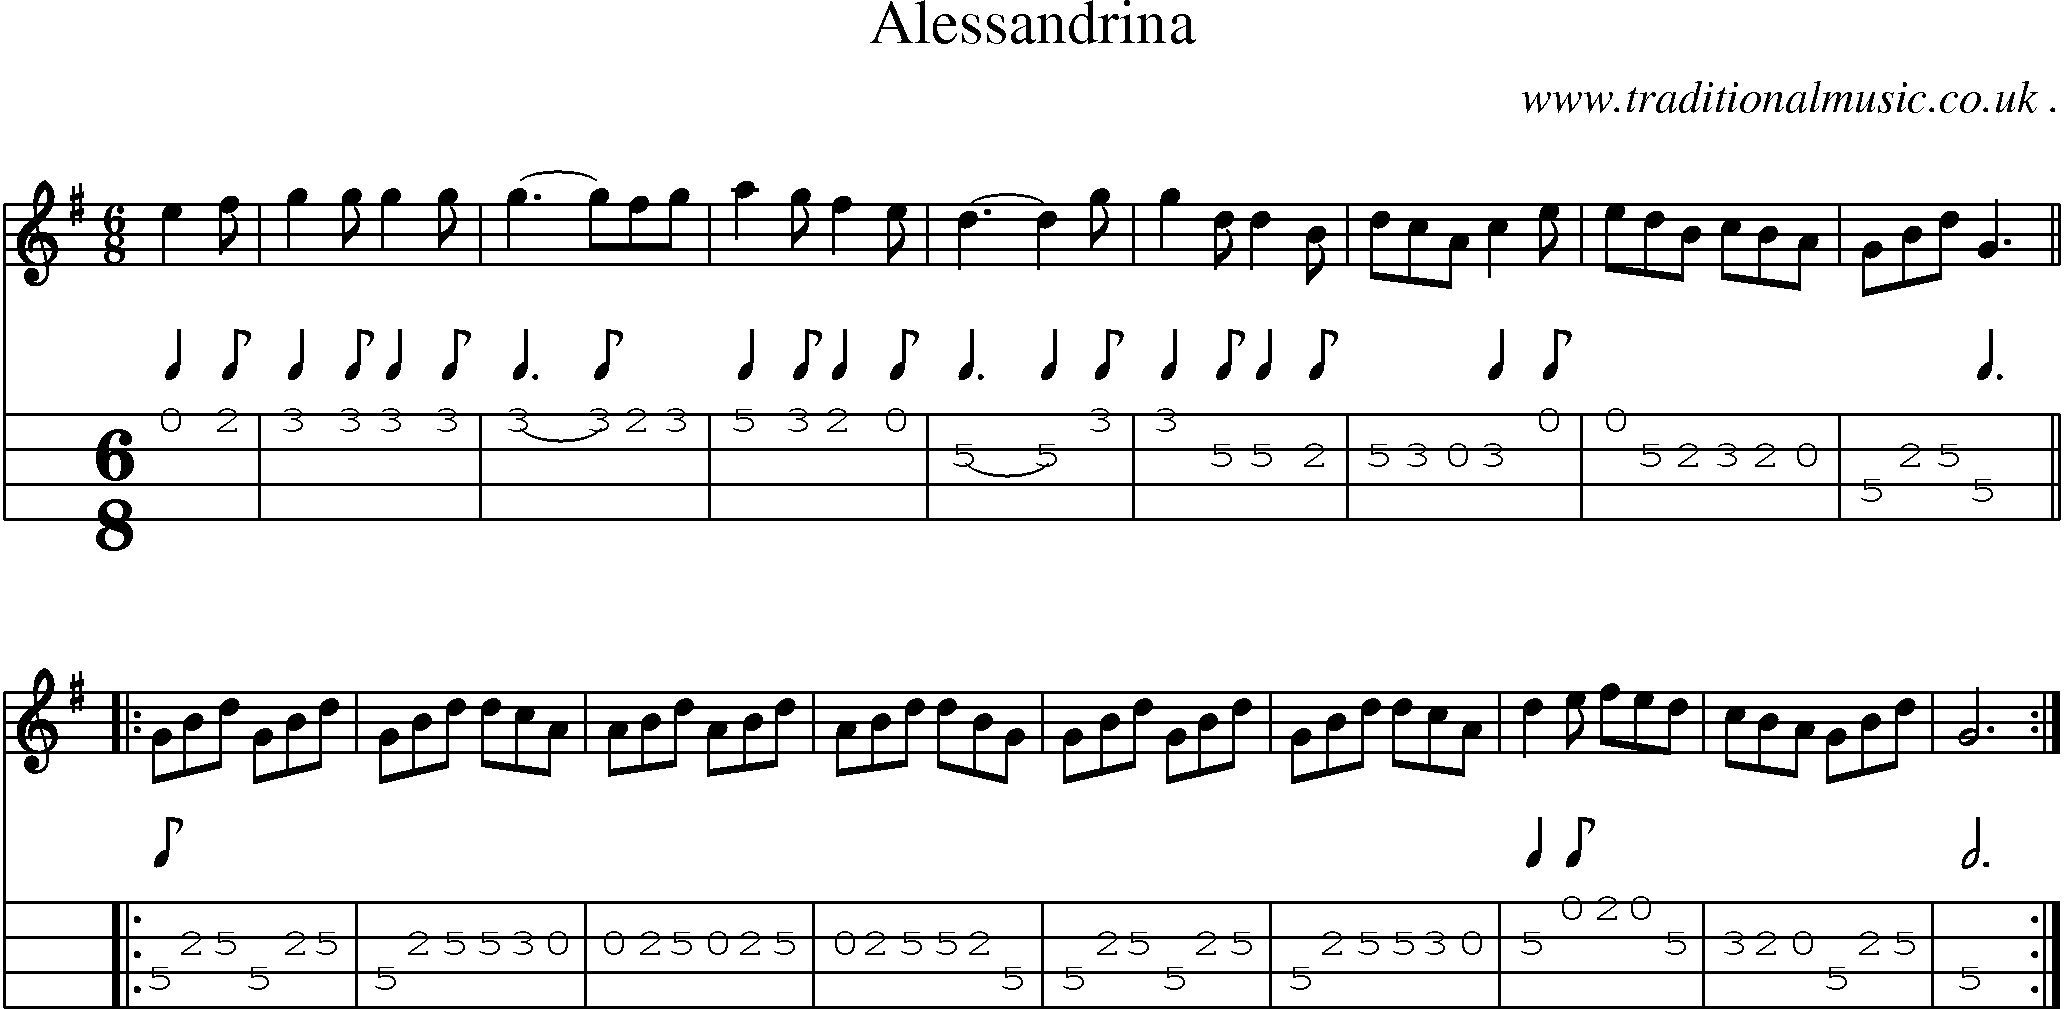 Sheet-Music and Mandolin Tabs for Alessandrina